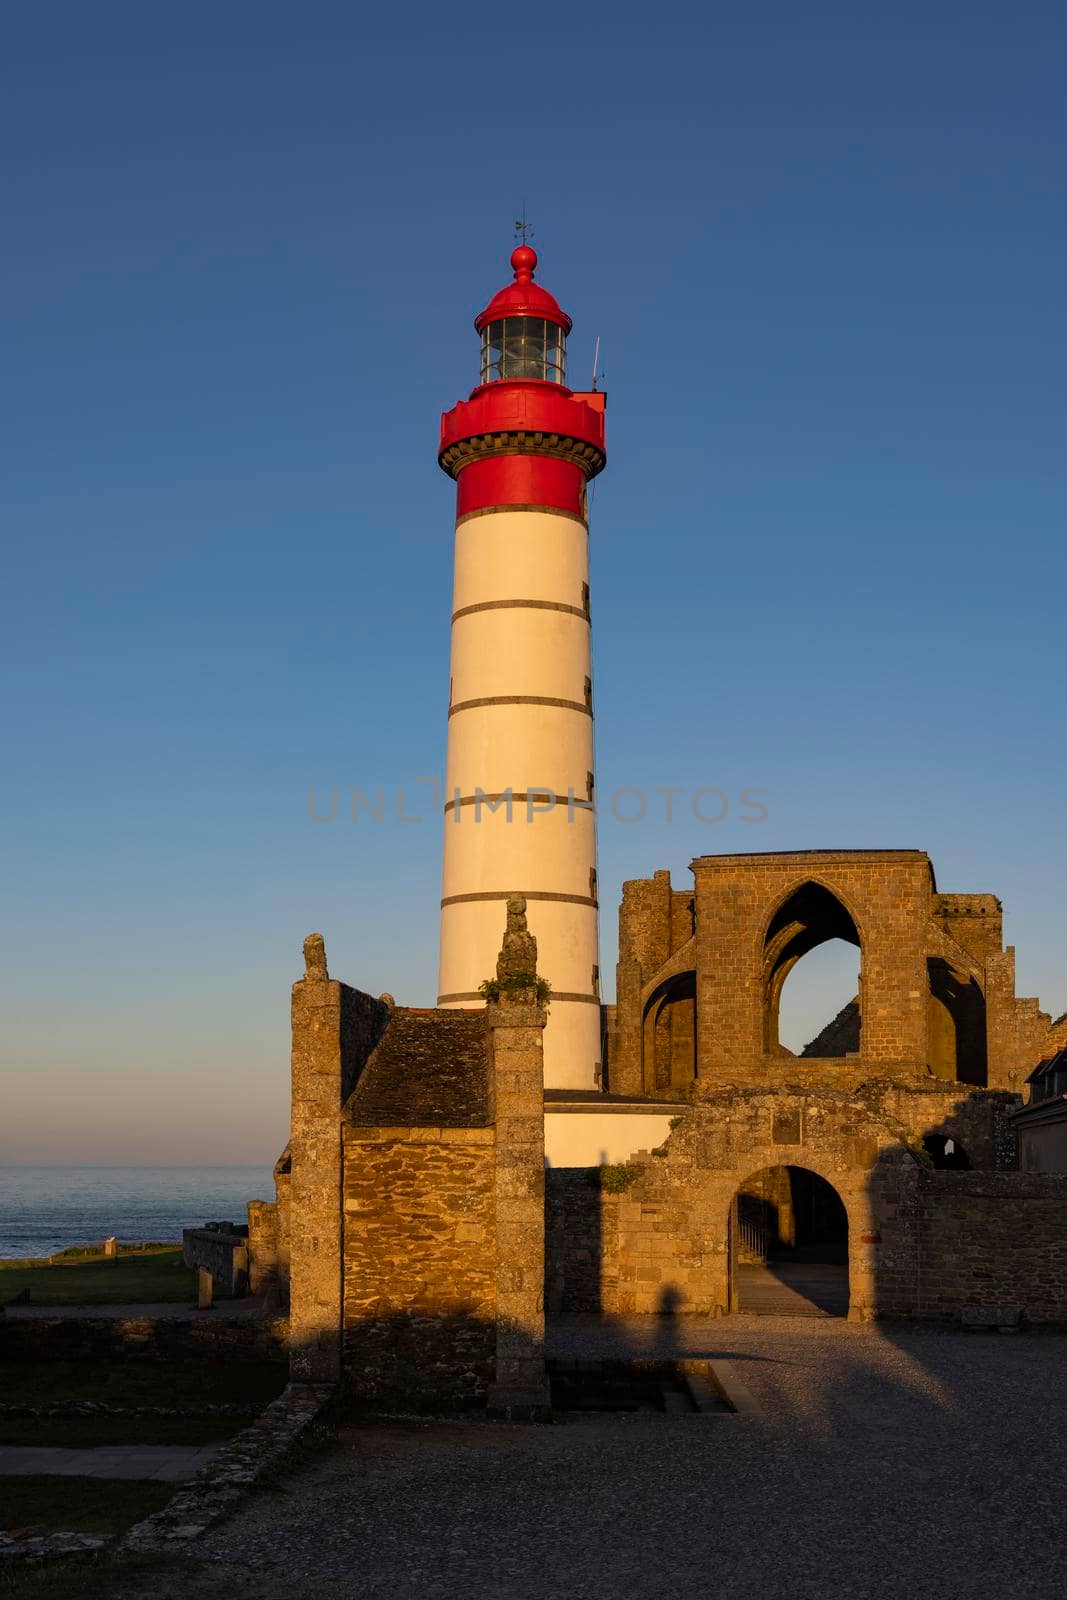 Saint-Mathieu Lighthouse, Pointe Saint-Mathieu in Plougonvelin, Finistere, France by phbcz